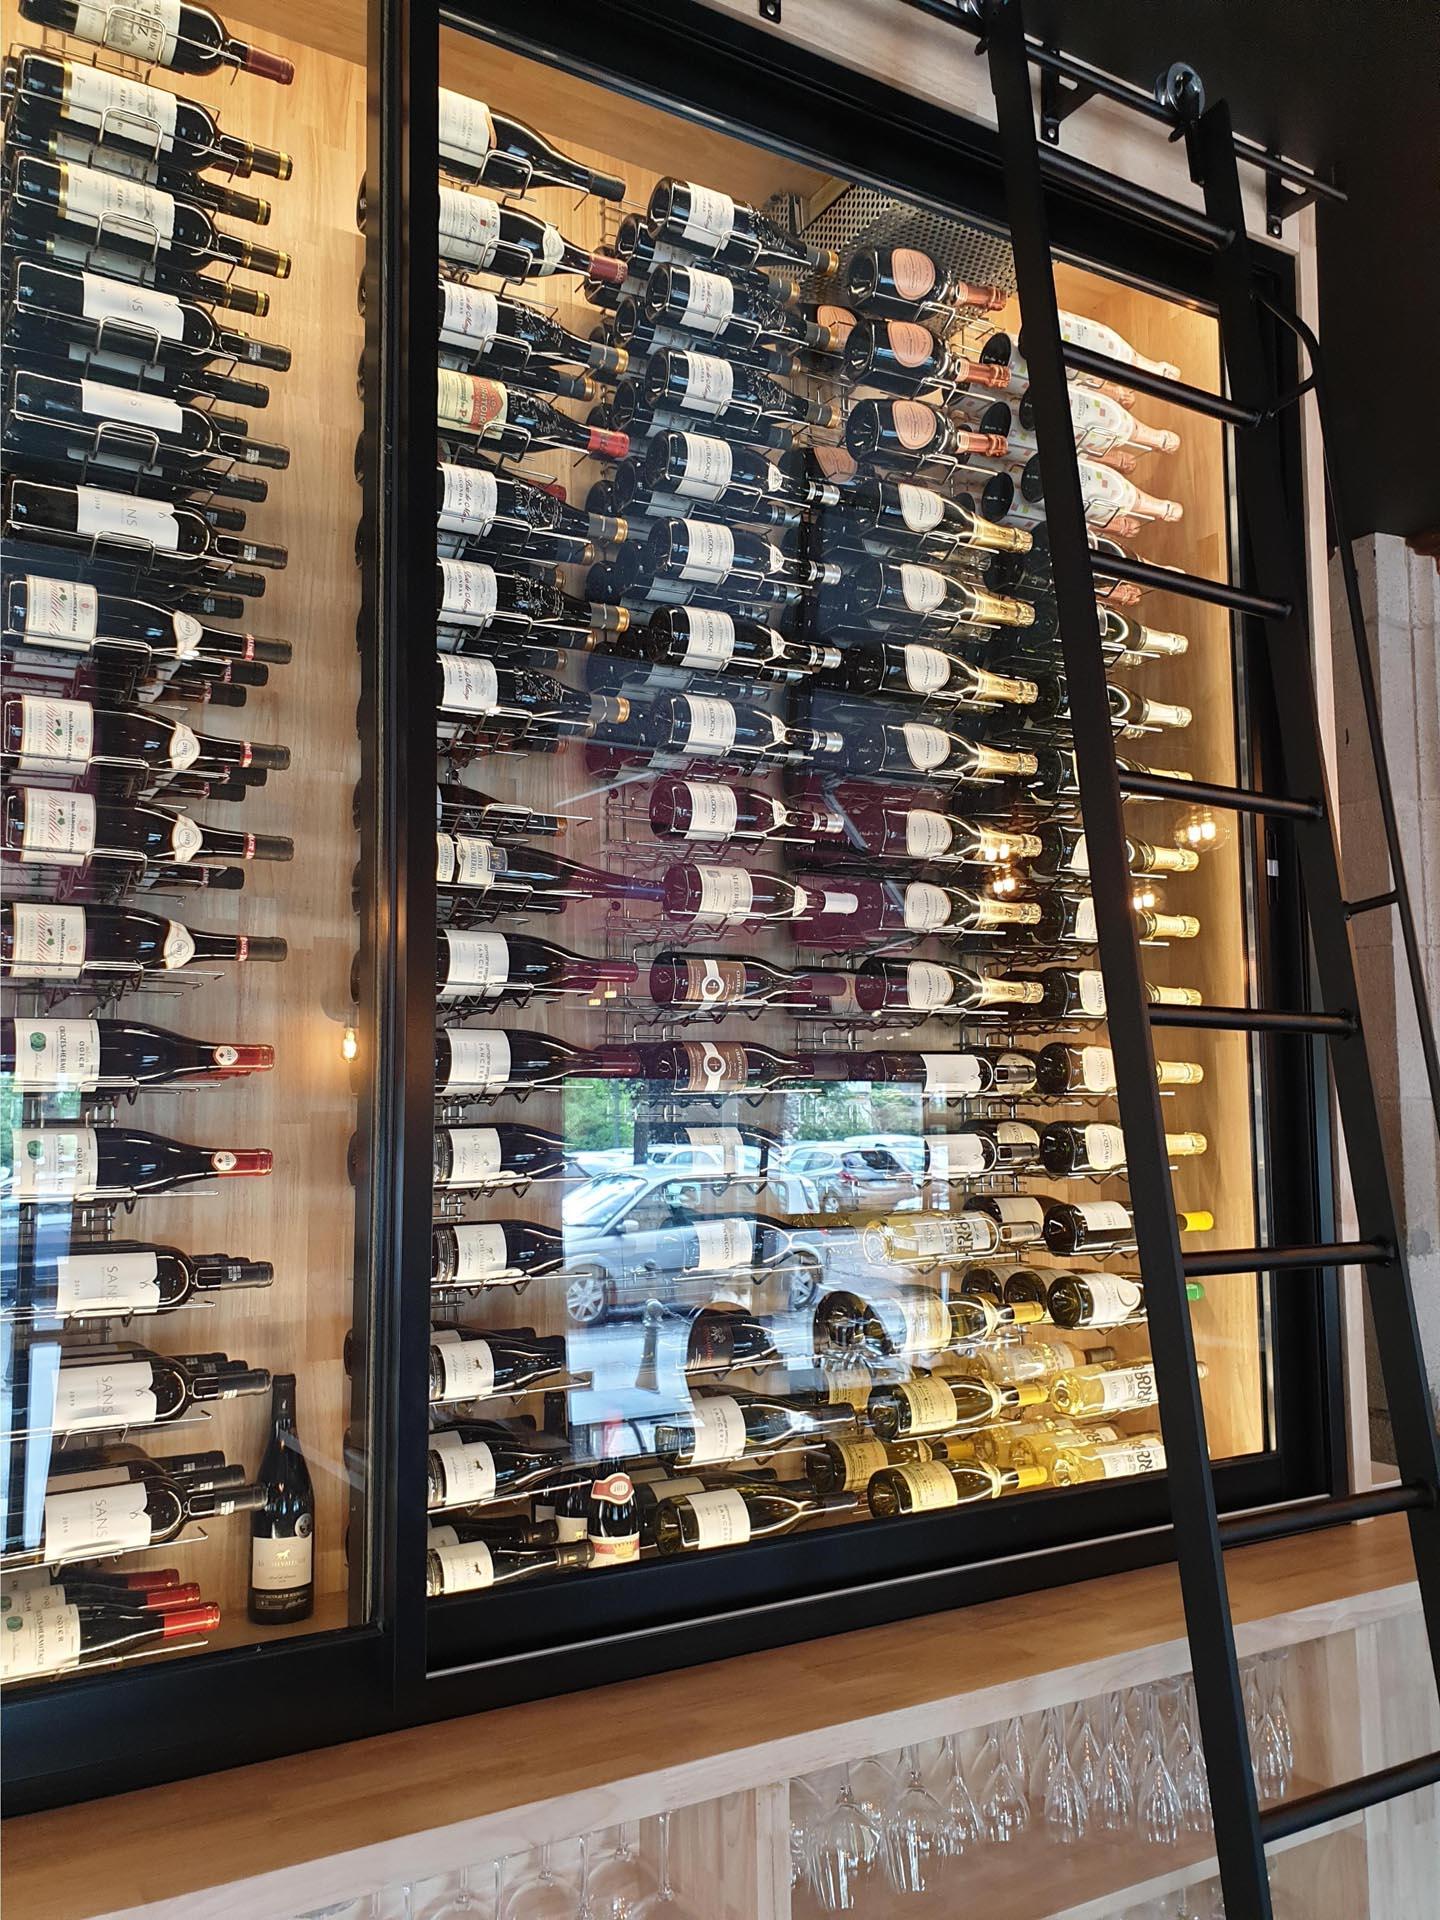 Wine bottles arranged nicely inside a cabinet